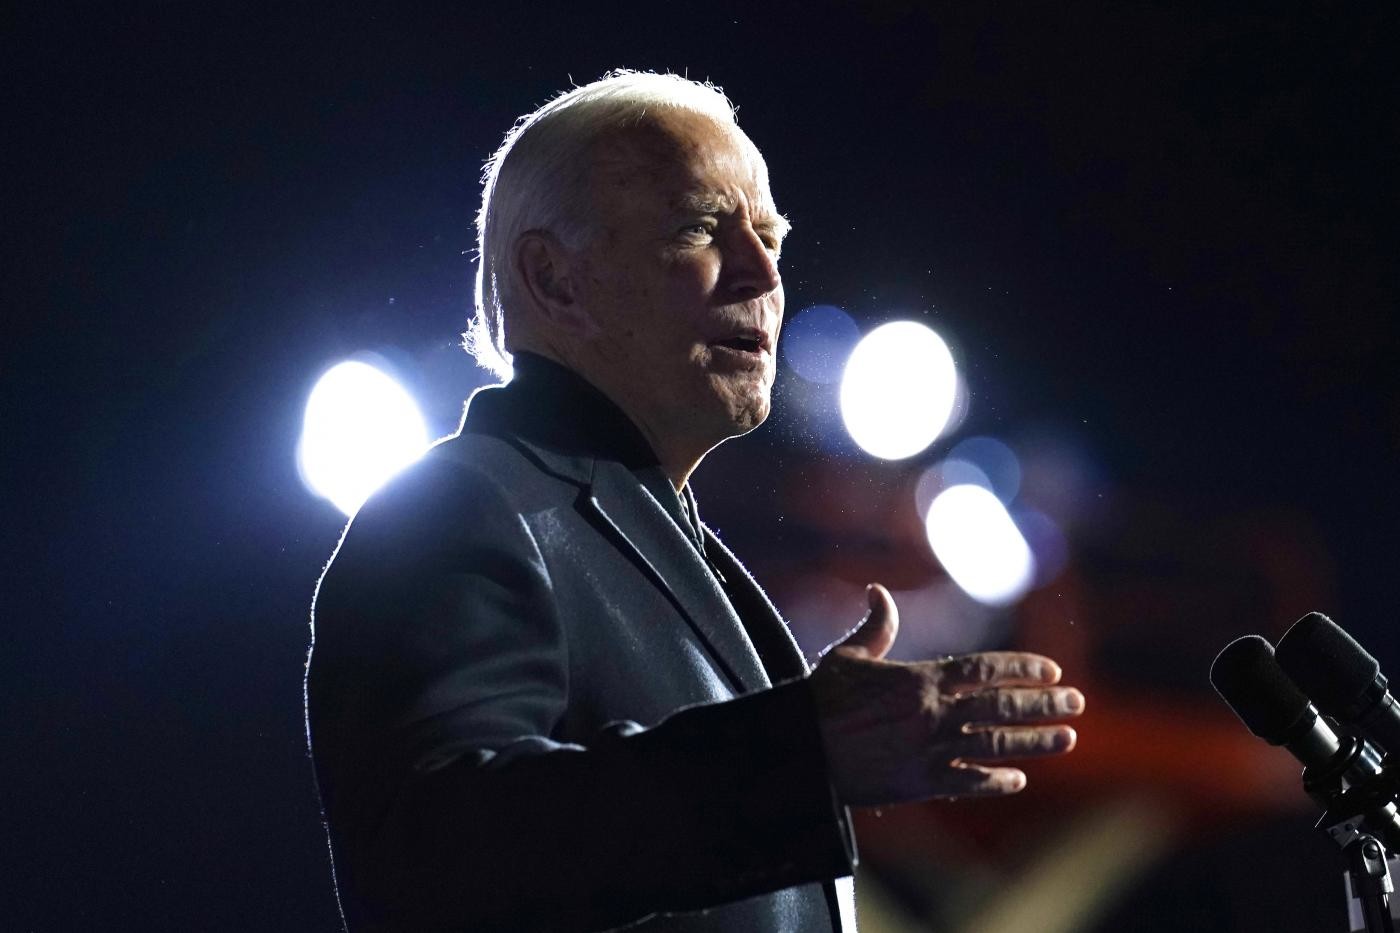 USA 2020, Biden: ‘Middle class Joe’, veterano politica a 3° tentativo per Casa Bianca